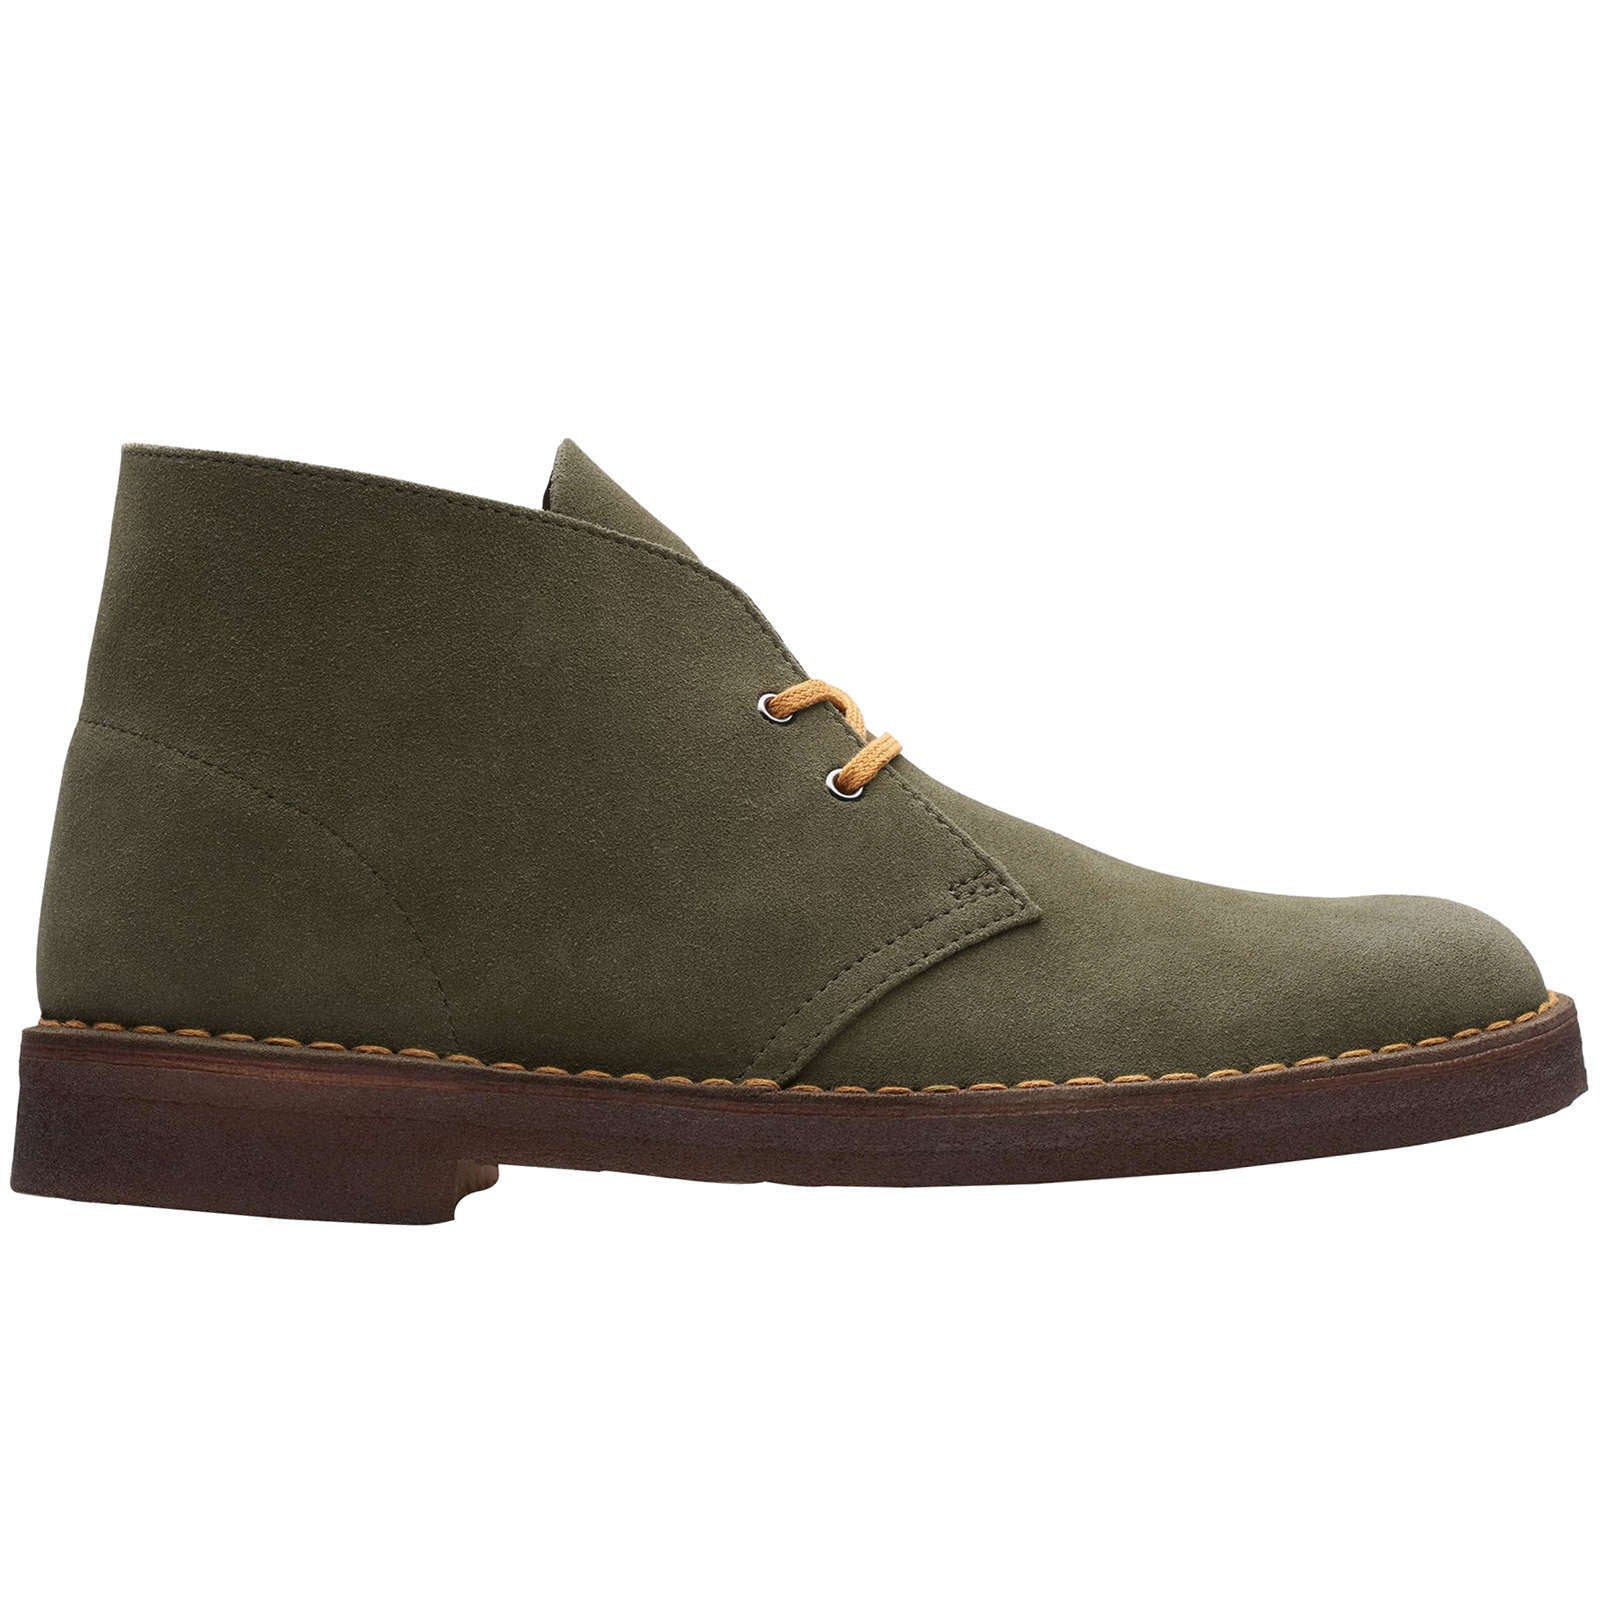 Clarks Originals Desert Boot Suede Leather Men's Boots#color_tobacco